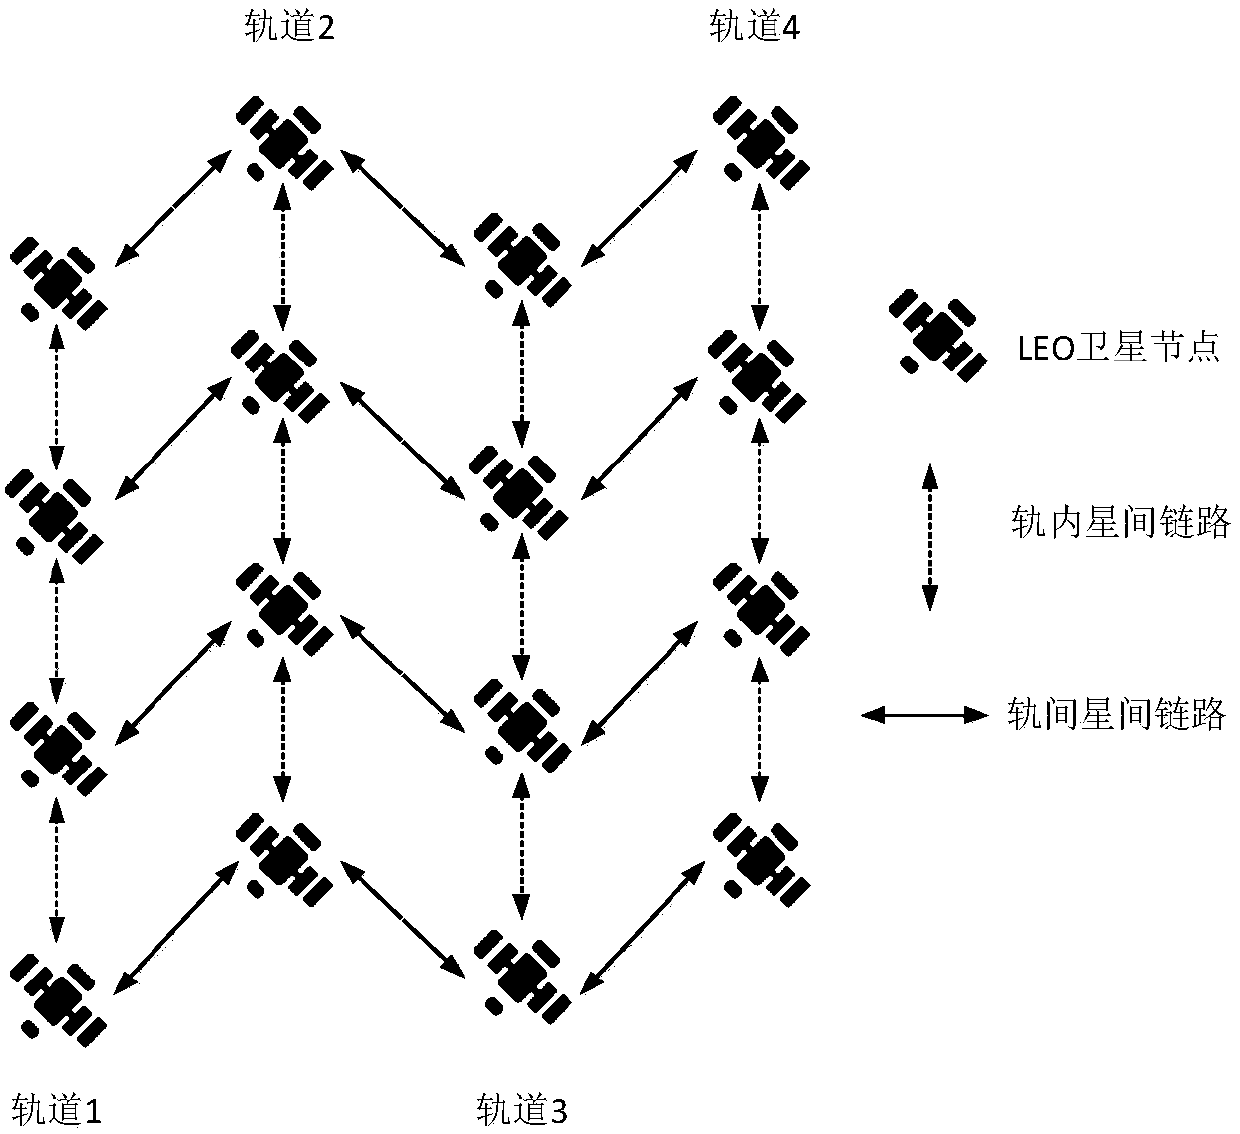 LEO satellite network optimum profit routing method based on cooperative game